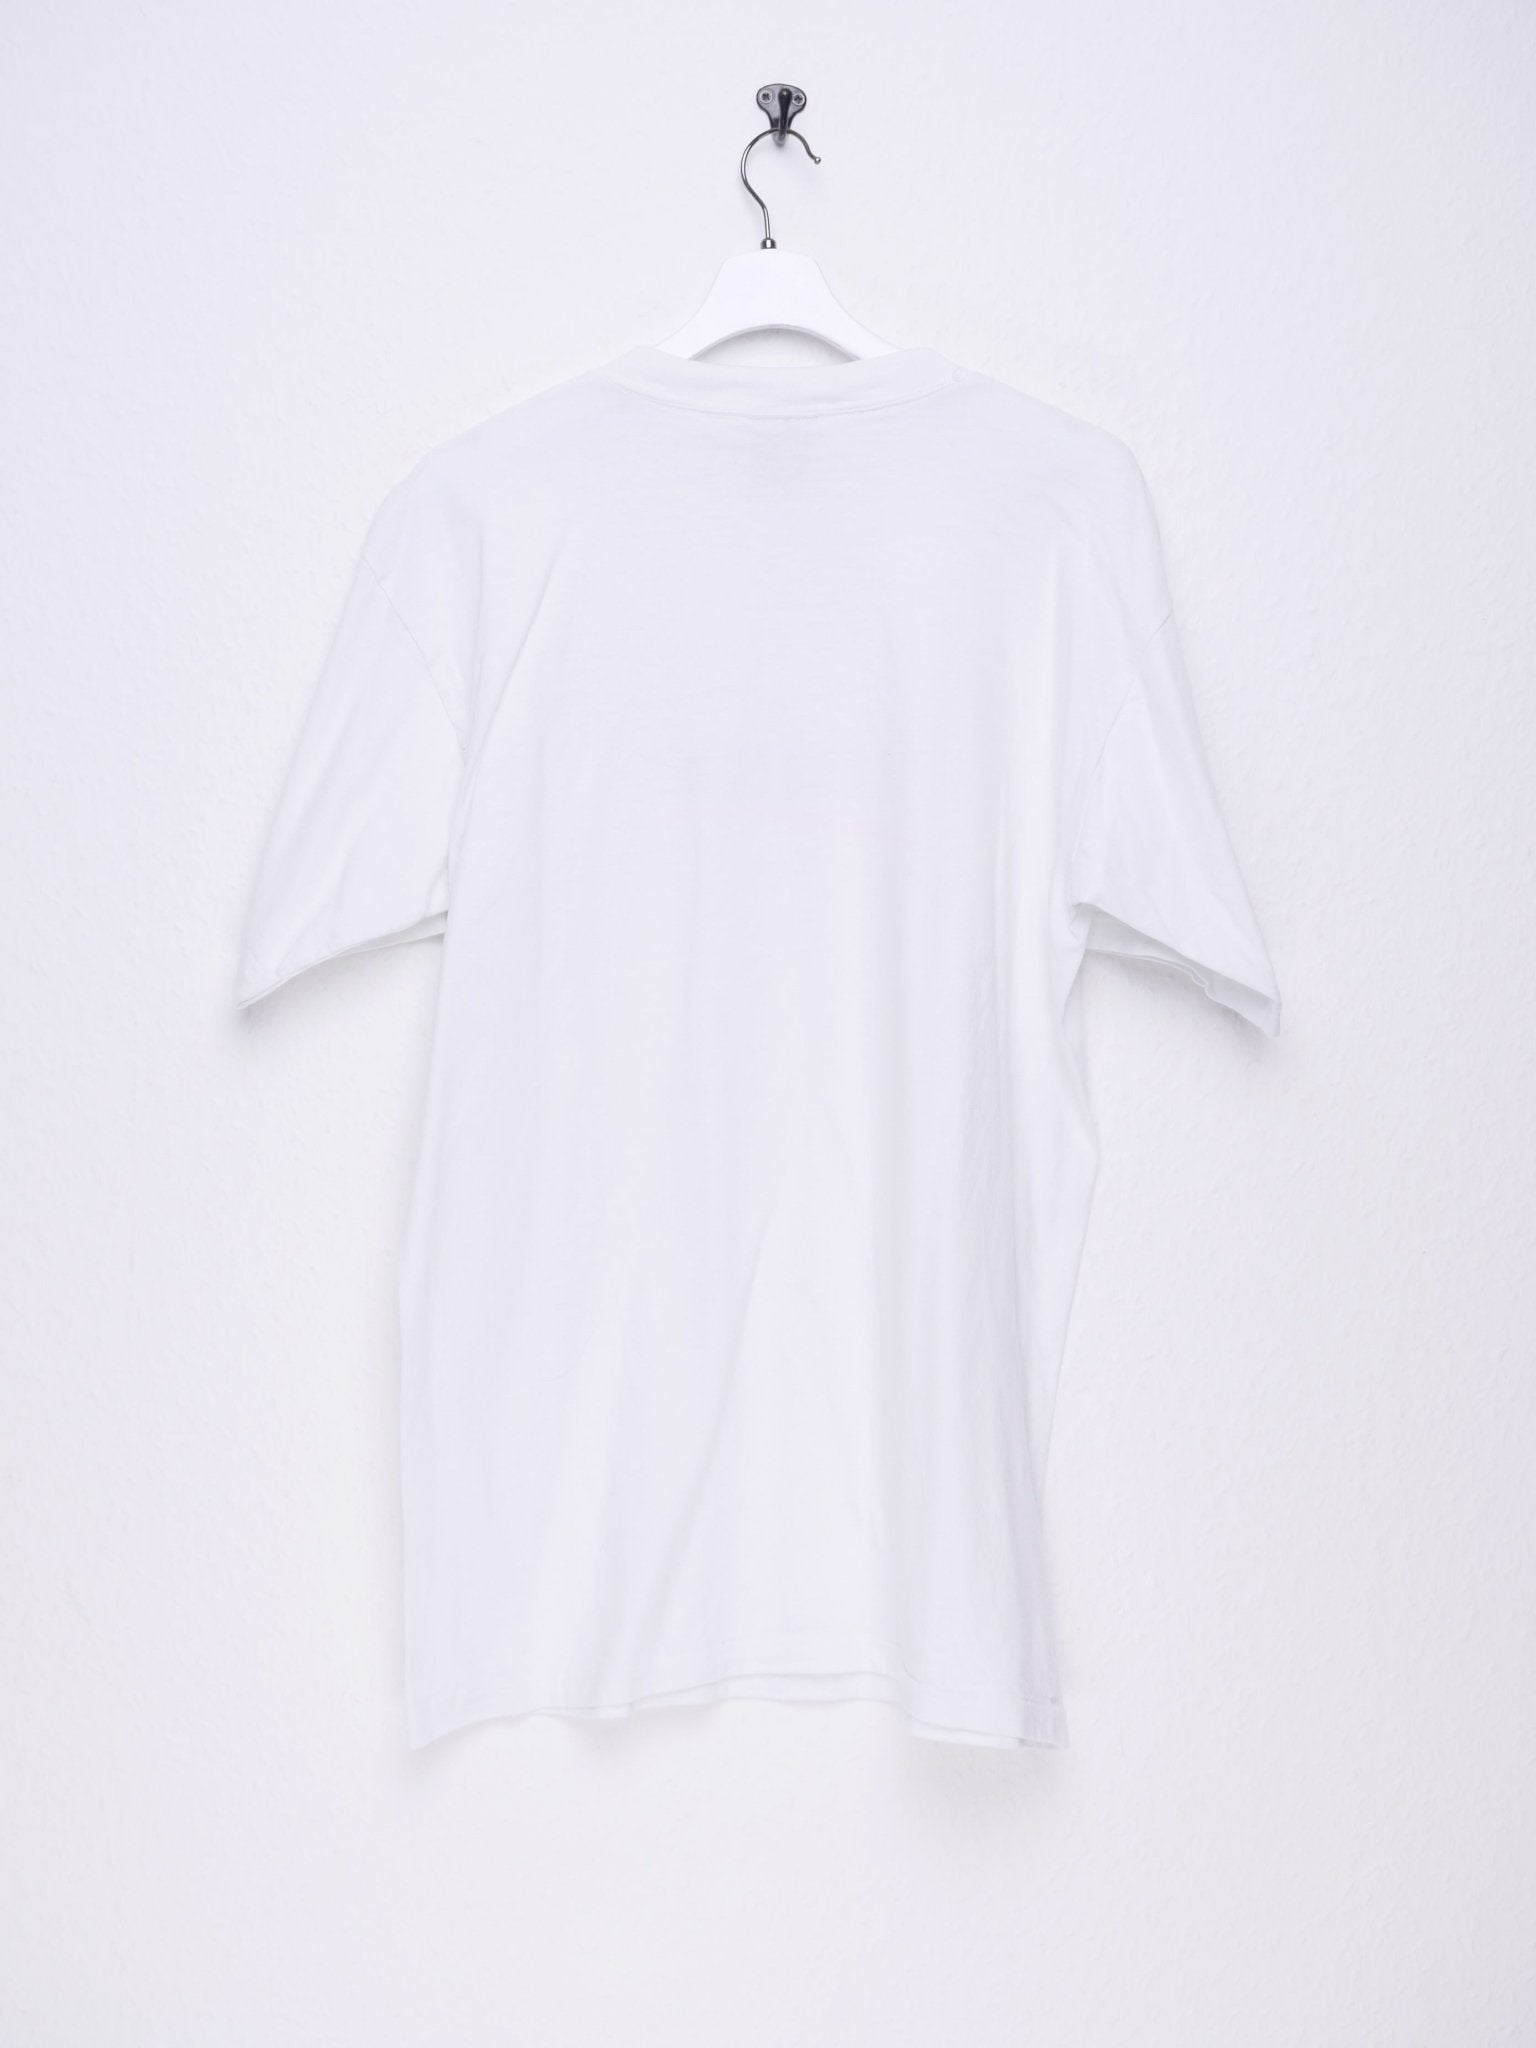 'Scratch' printed white Vintage Shirt - Peeces